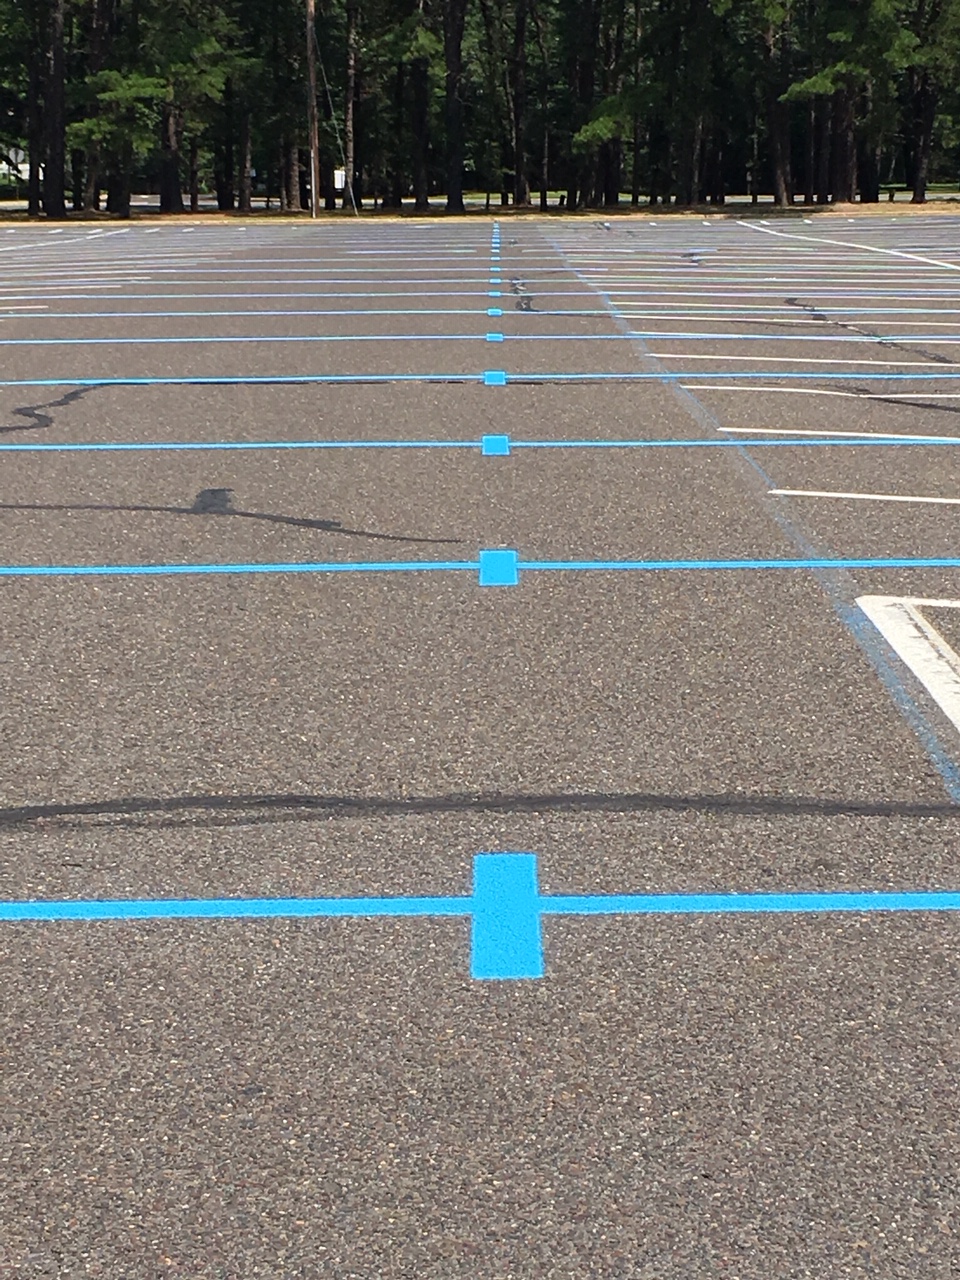 blacktop striping medford, pavement parking lot striping, pavement markings